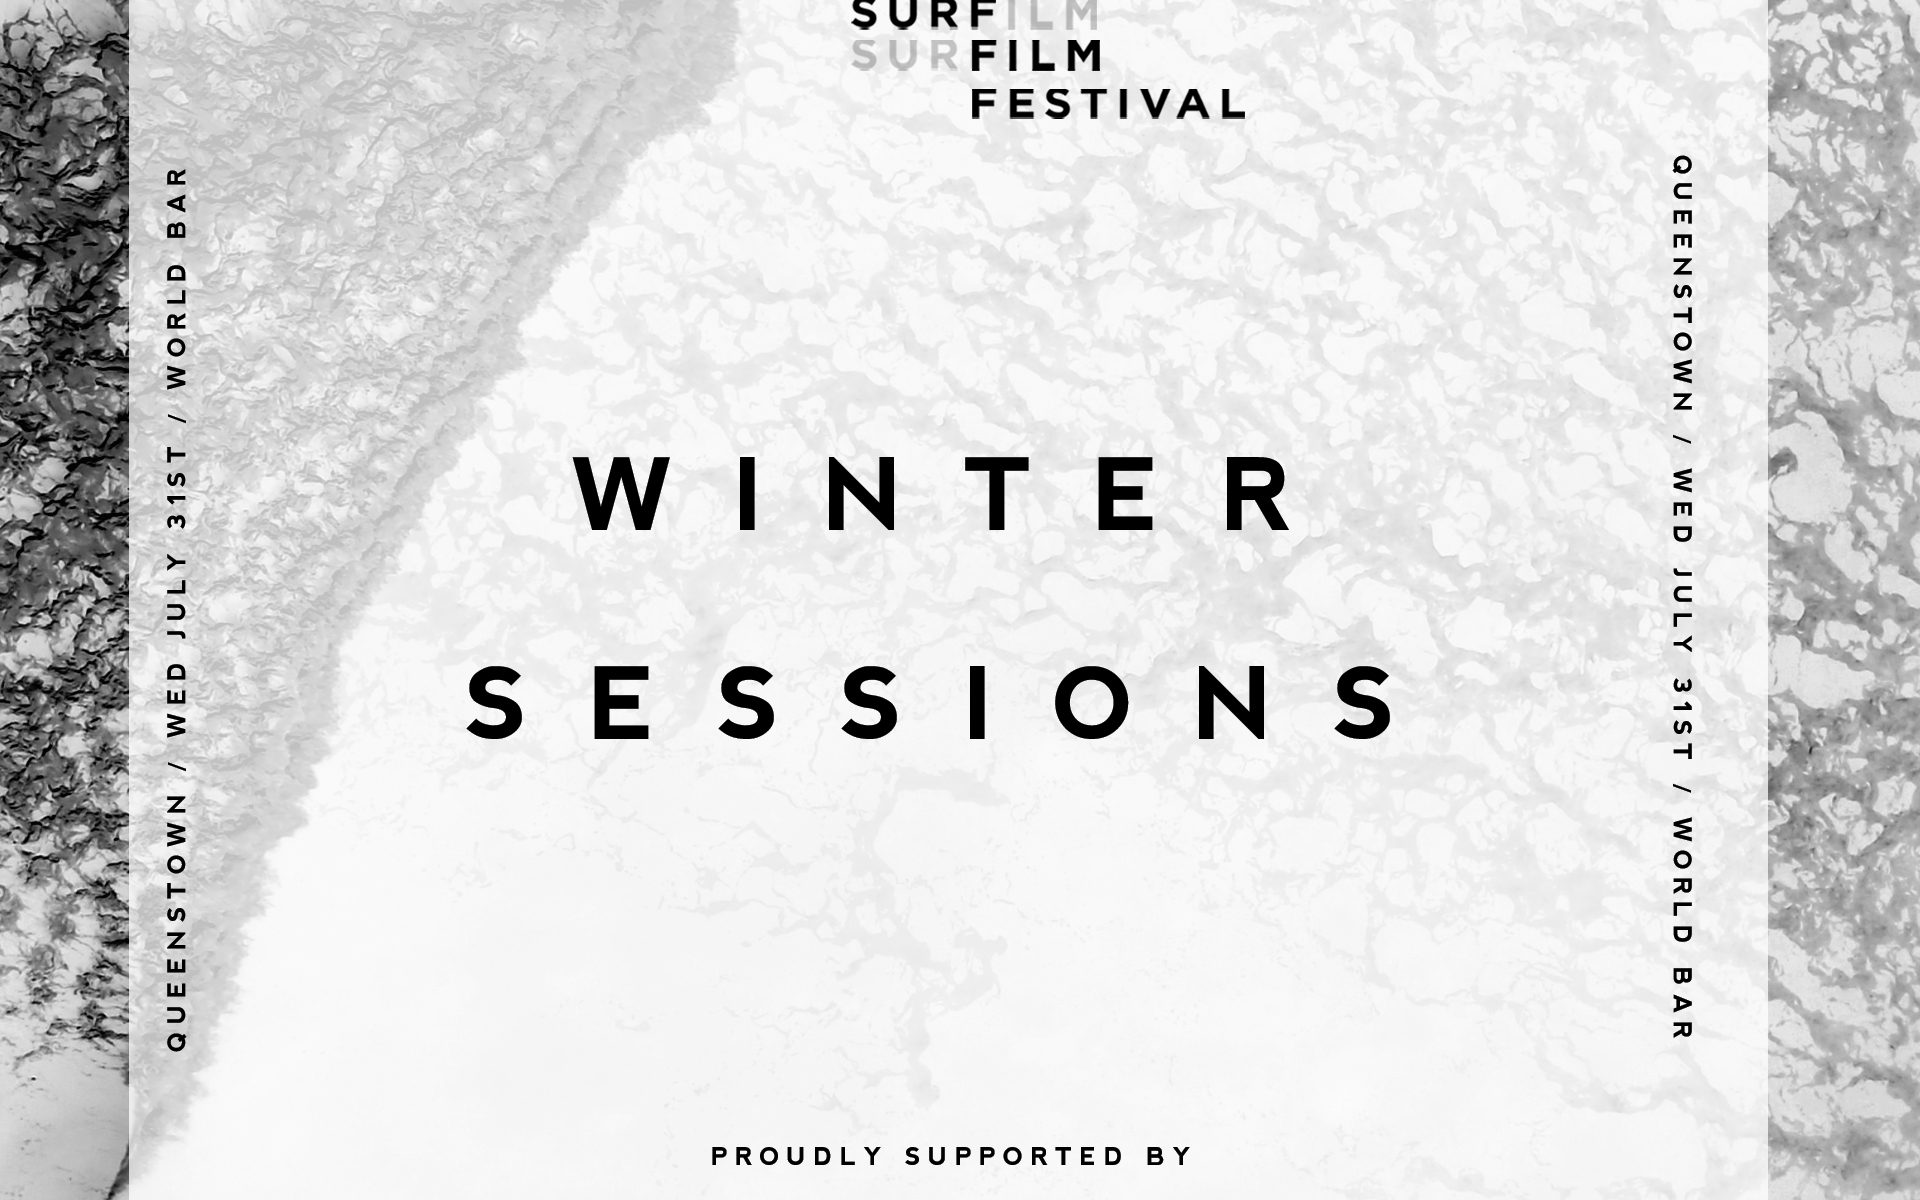 New Zealand surf film festival